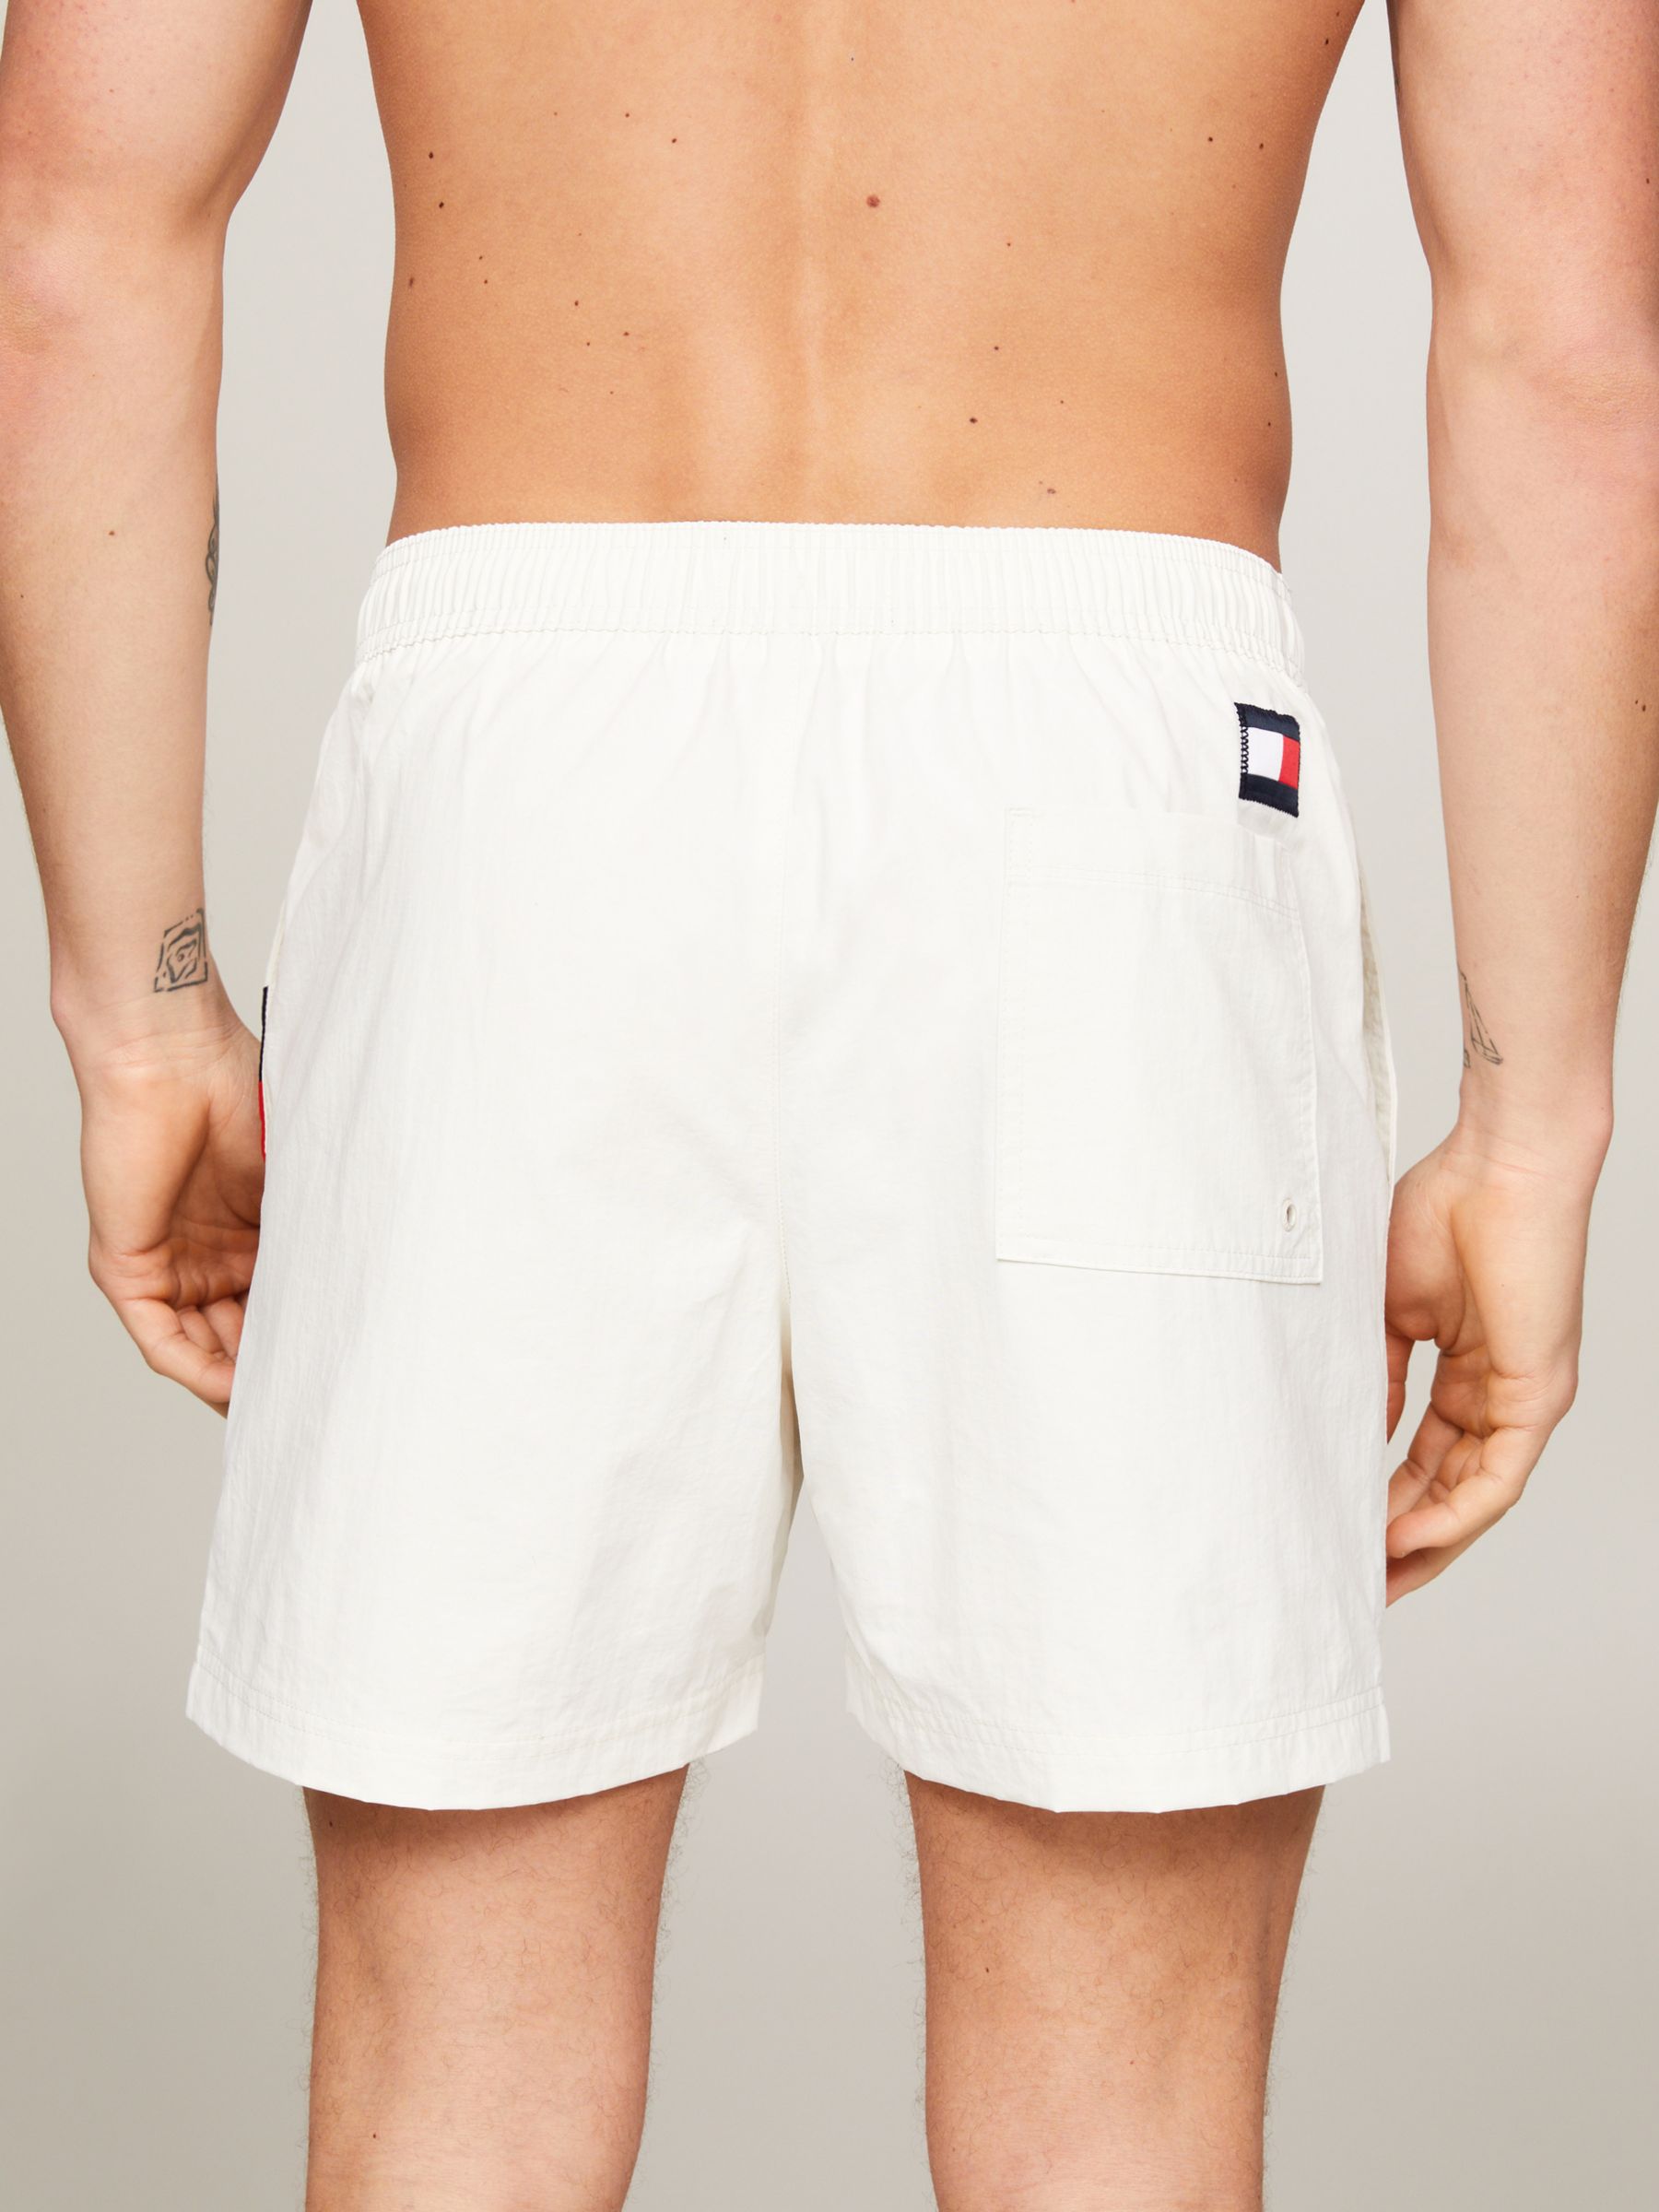 Tommy Hilfiger Iconic Flag Drawstring Swim Shorts, Ivory/Multi, L